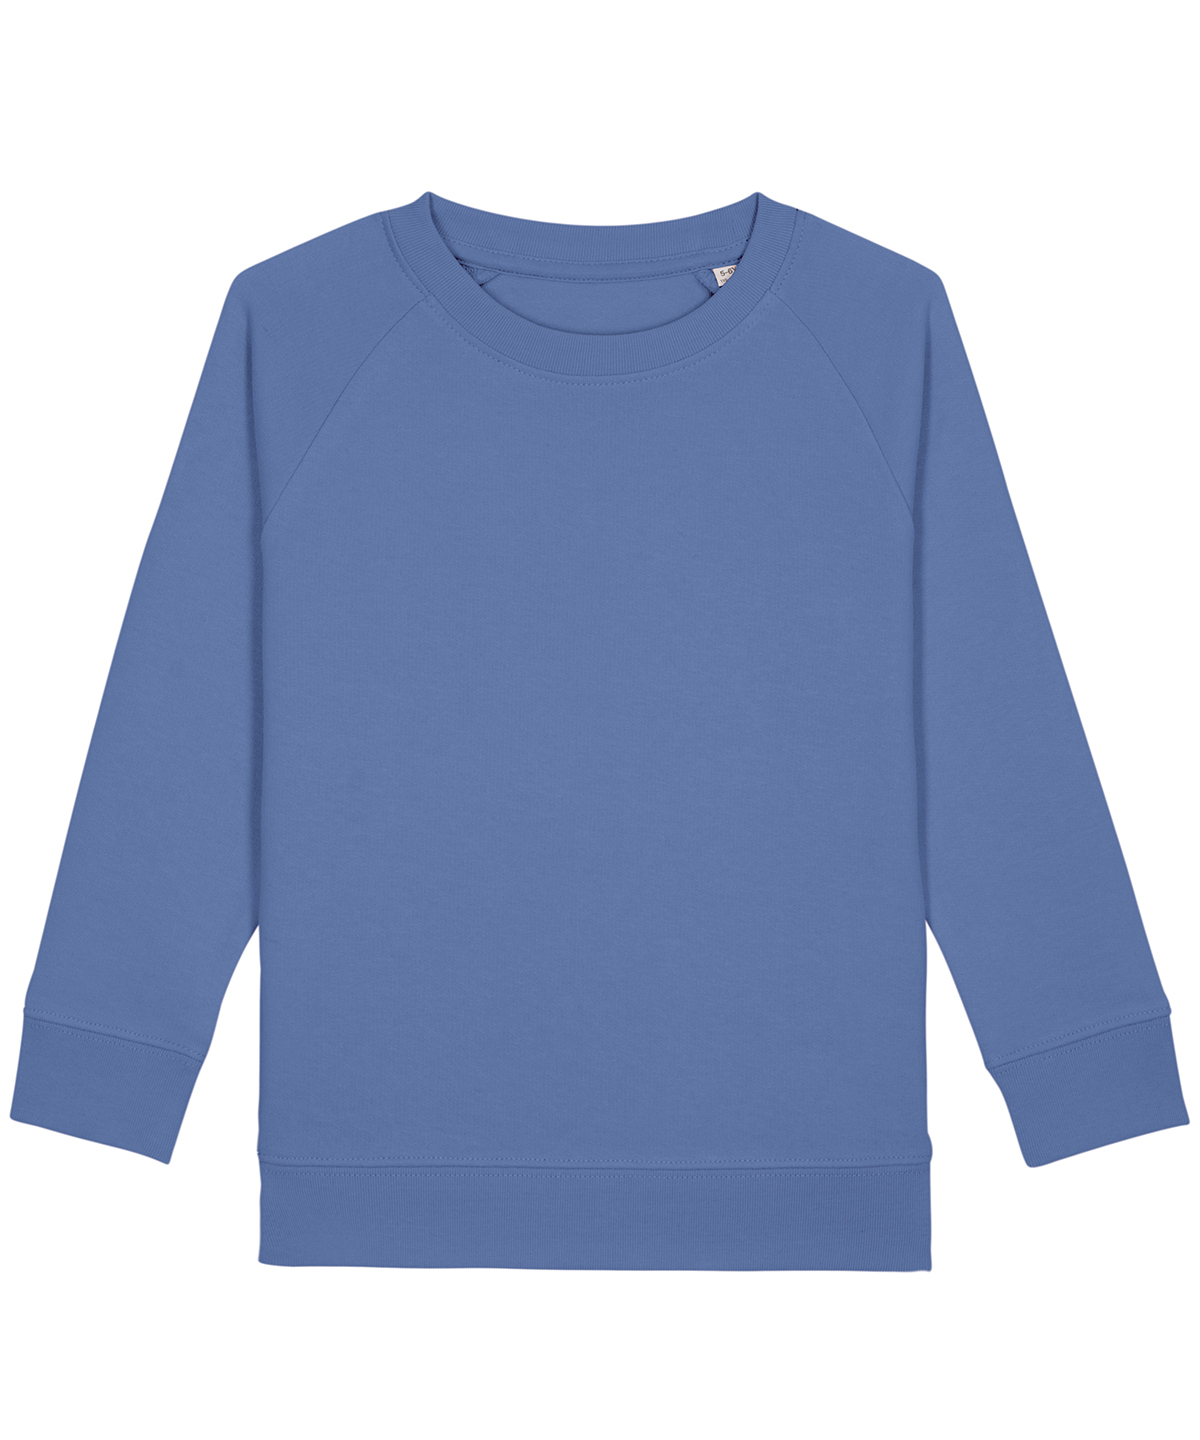 Safetywear - Sweatshirts - Page 1 - Matrix Workwear